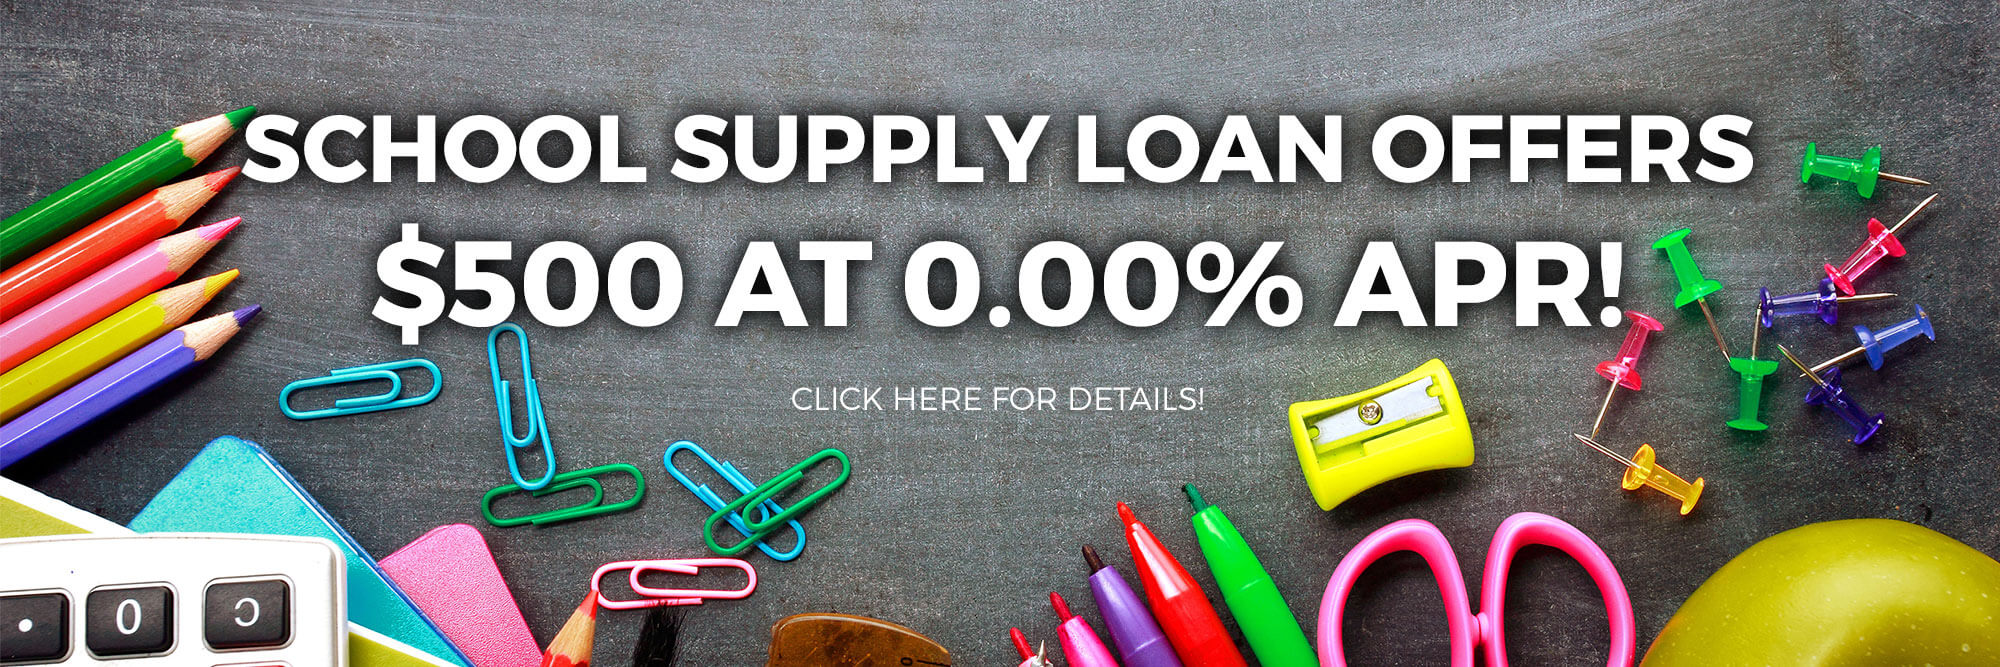 School Supply Loan Offers $500 at 0% APR!